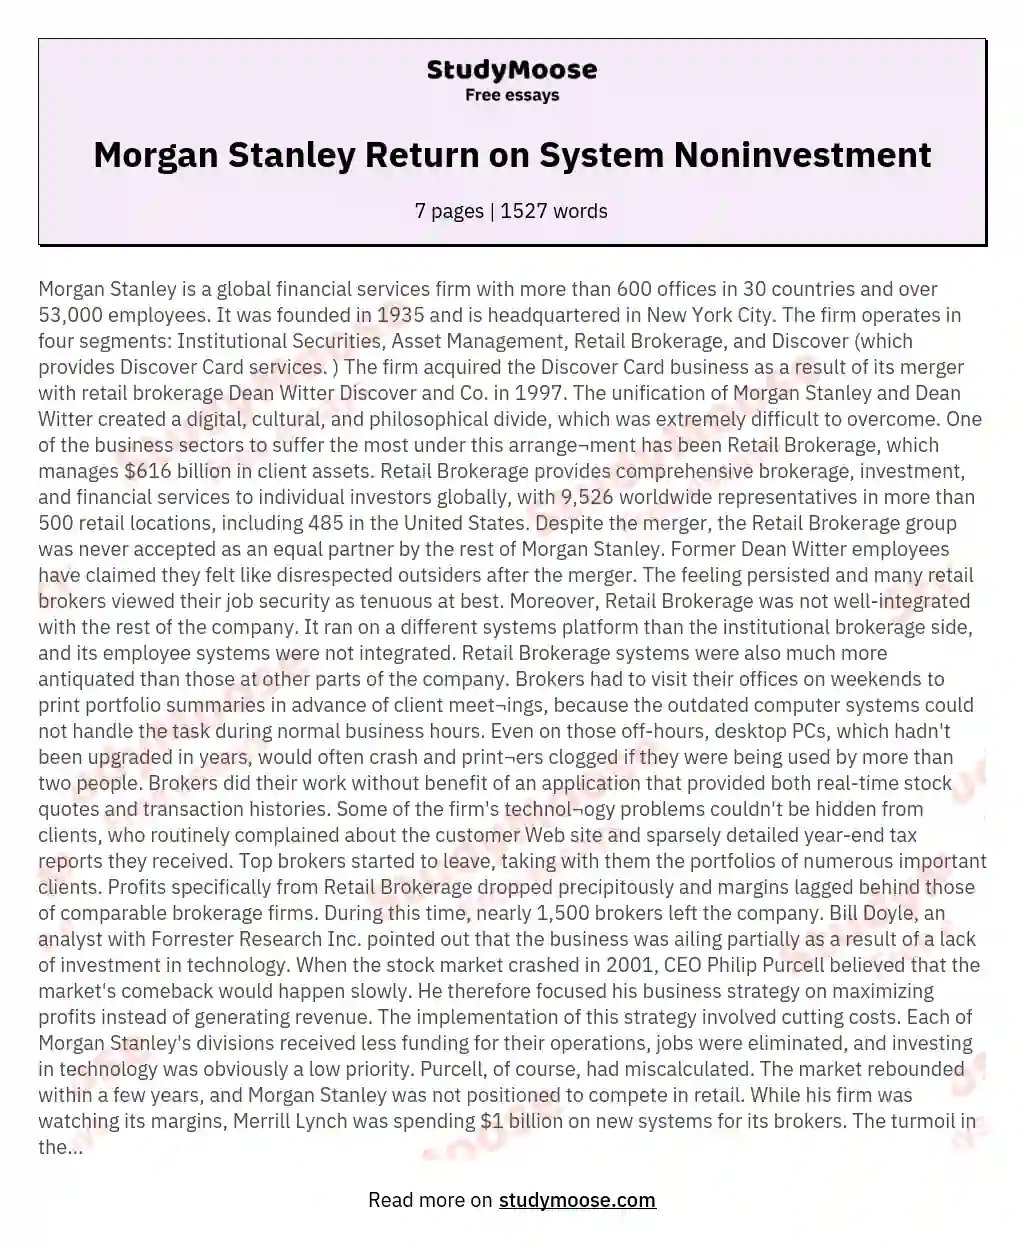 Morgan Stanley Return on System Noninvestment essay